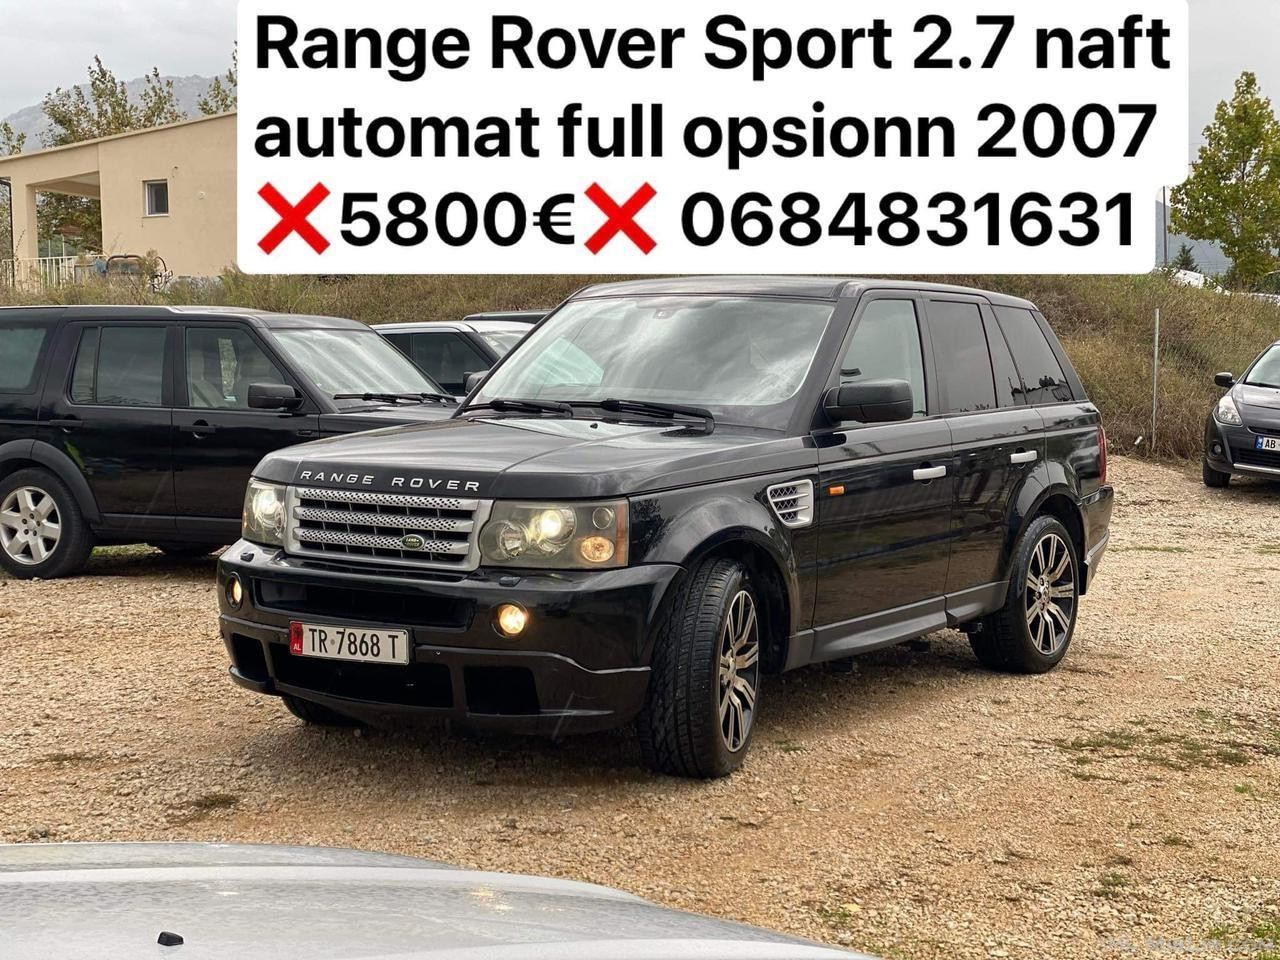 Range rover sport